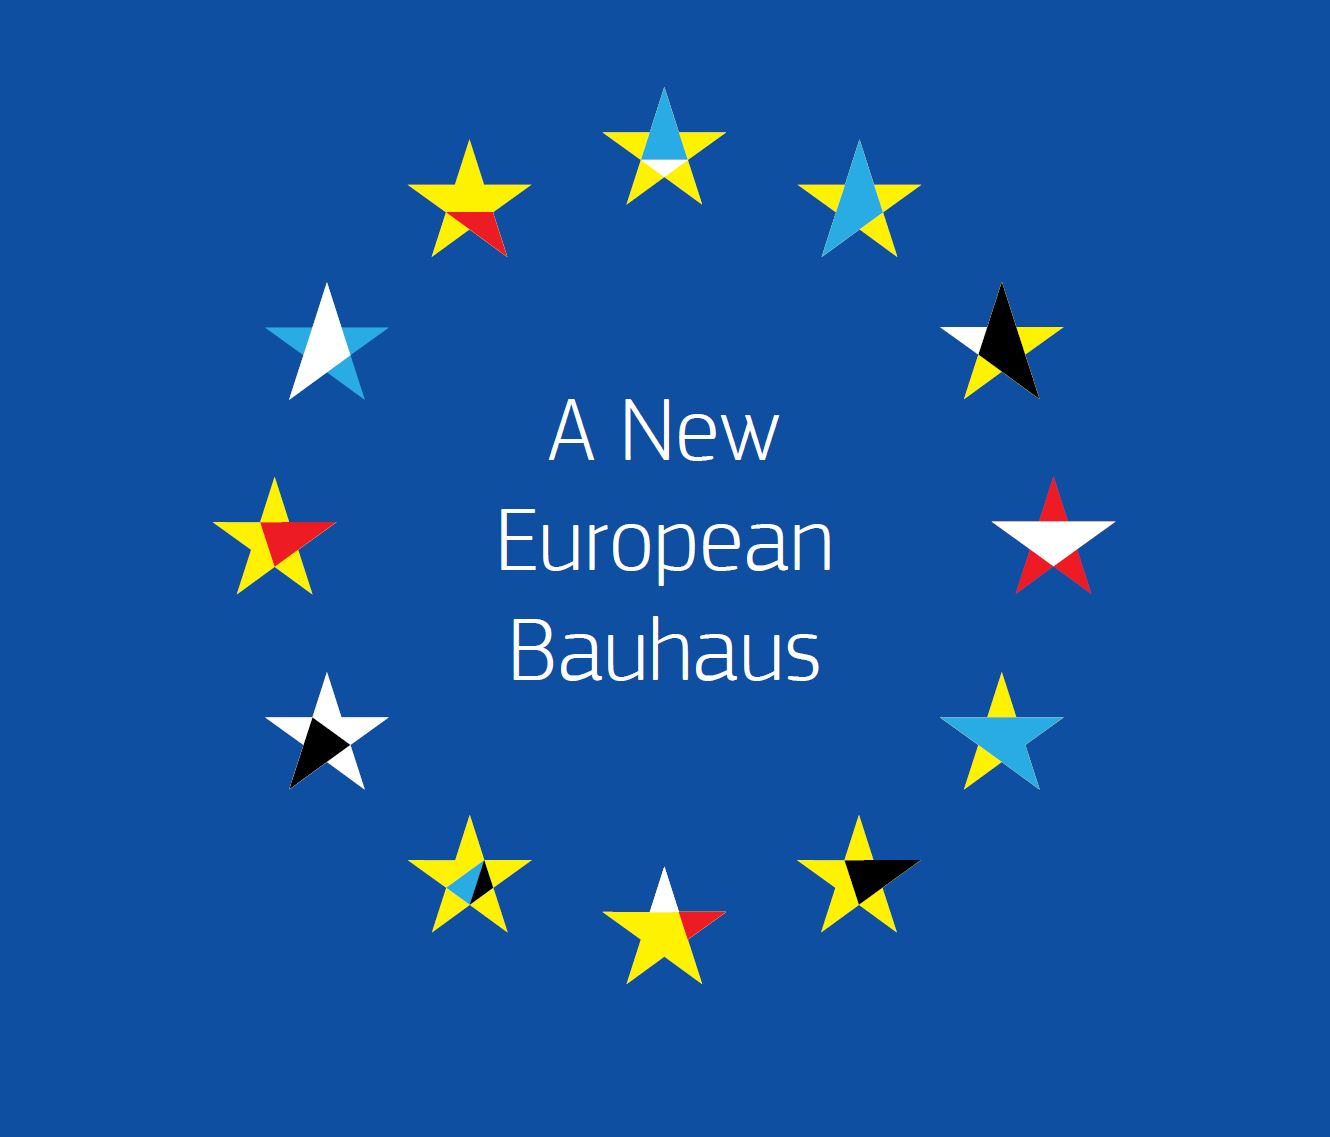 Co-creating New European Bauhaus